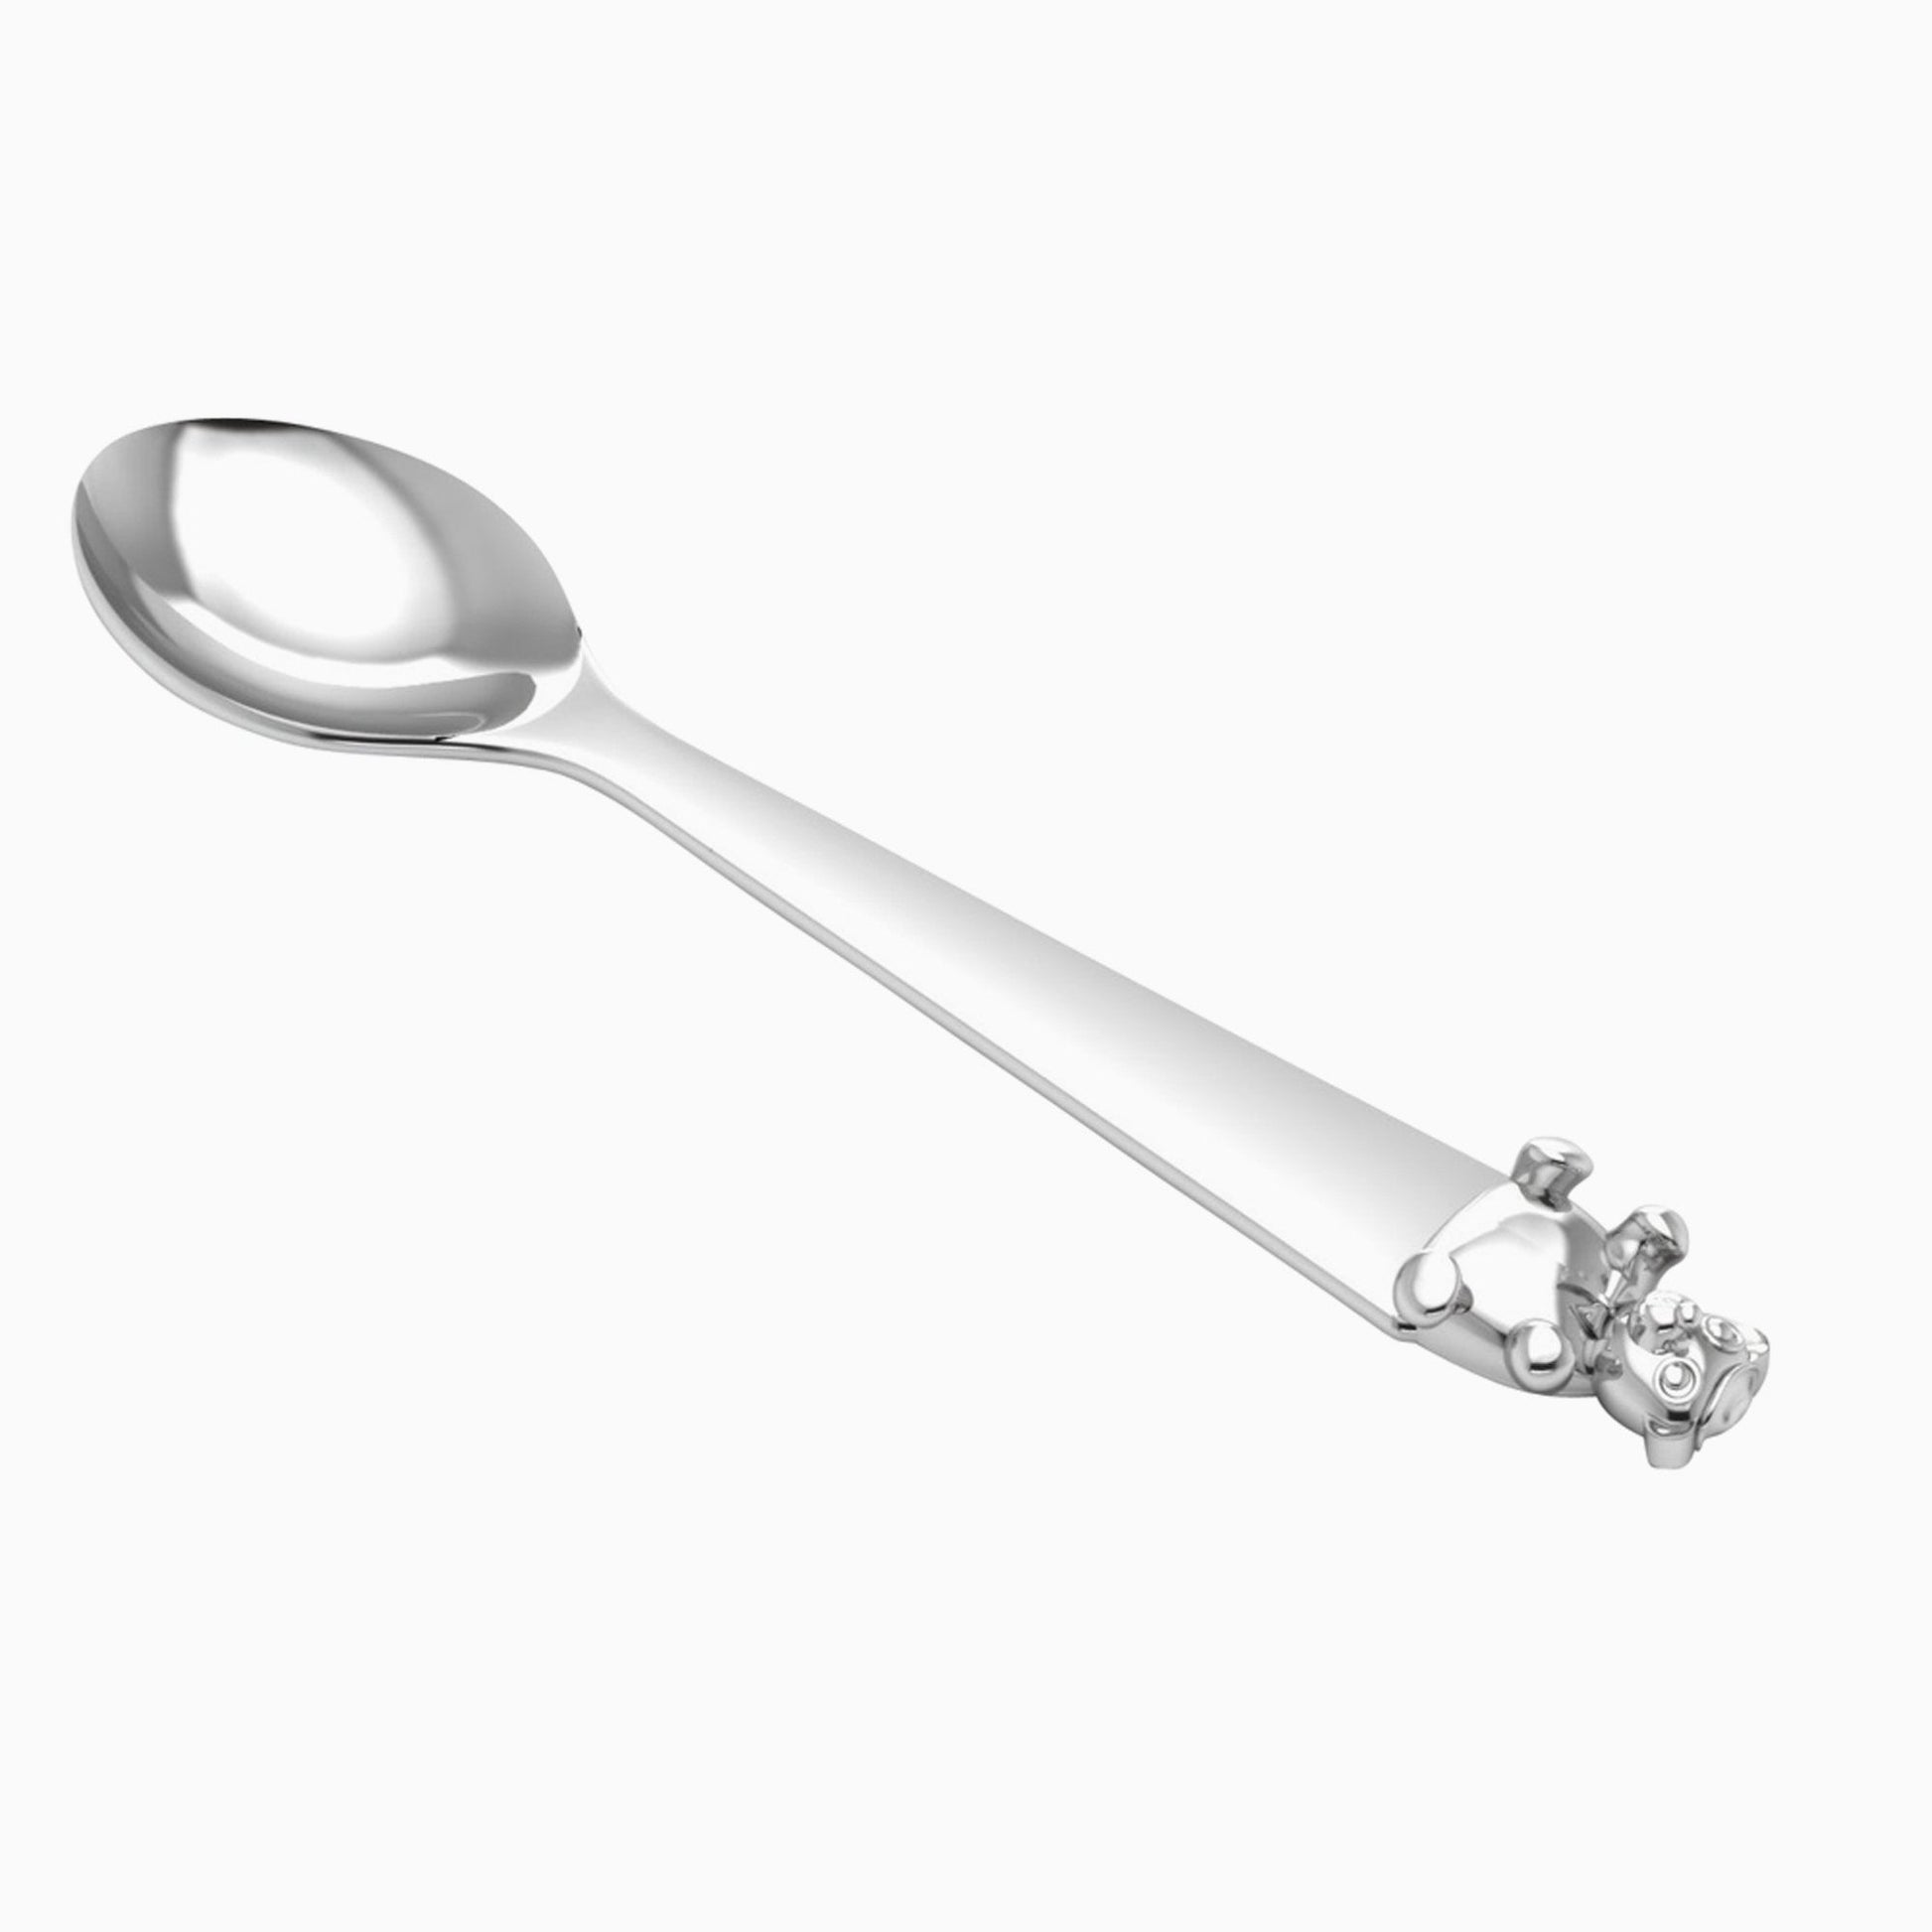 Baby Feeding Spoon